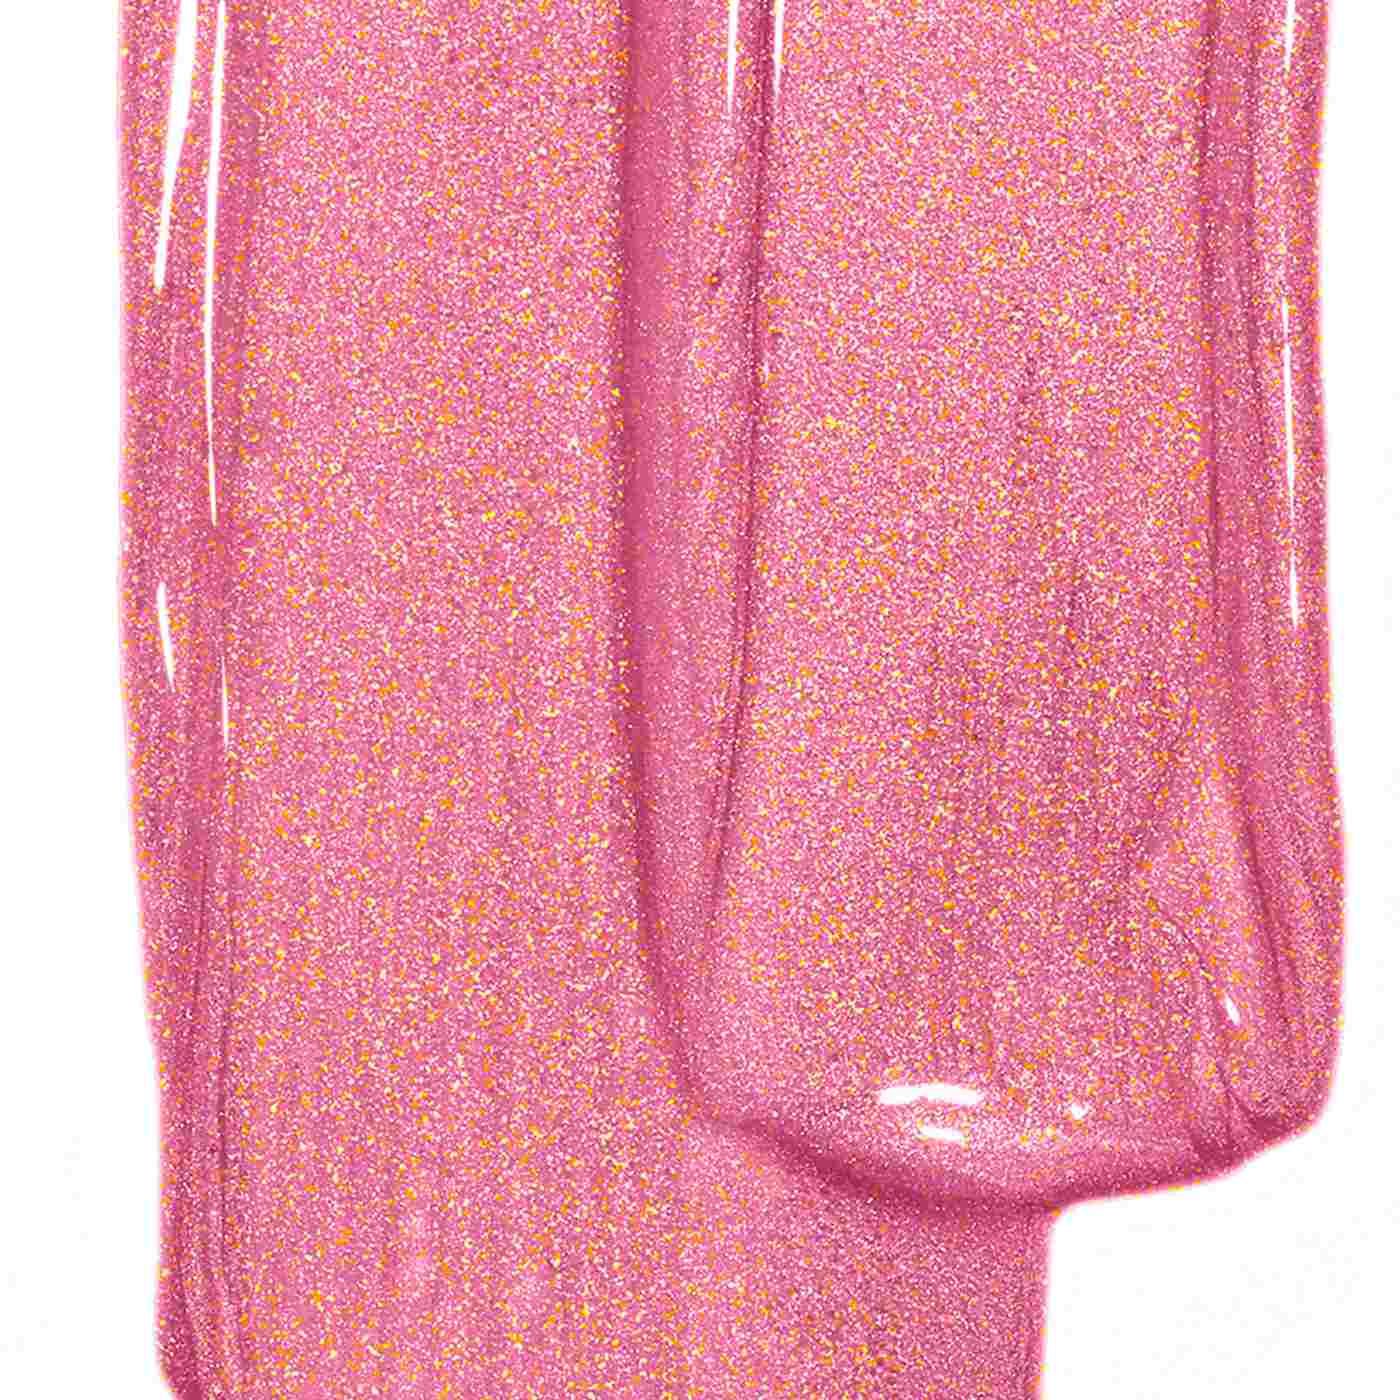 Revlon Super Lustrous The Gloss, 301 Rose Quartz; image 7 of 7